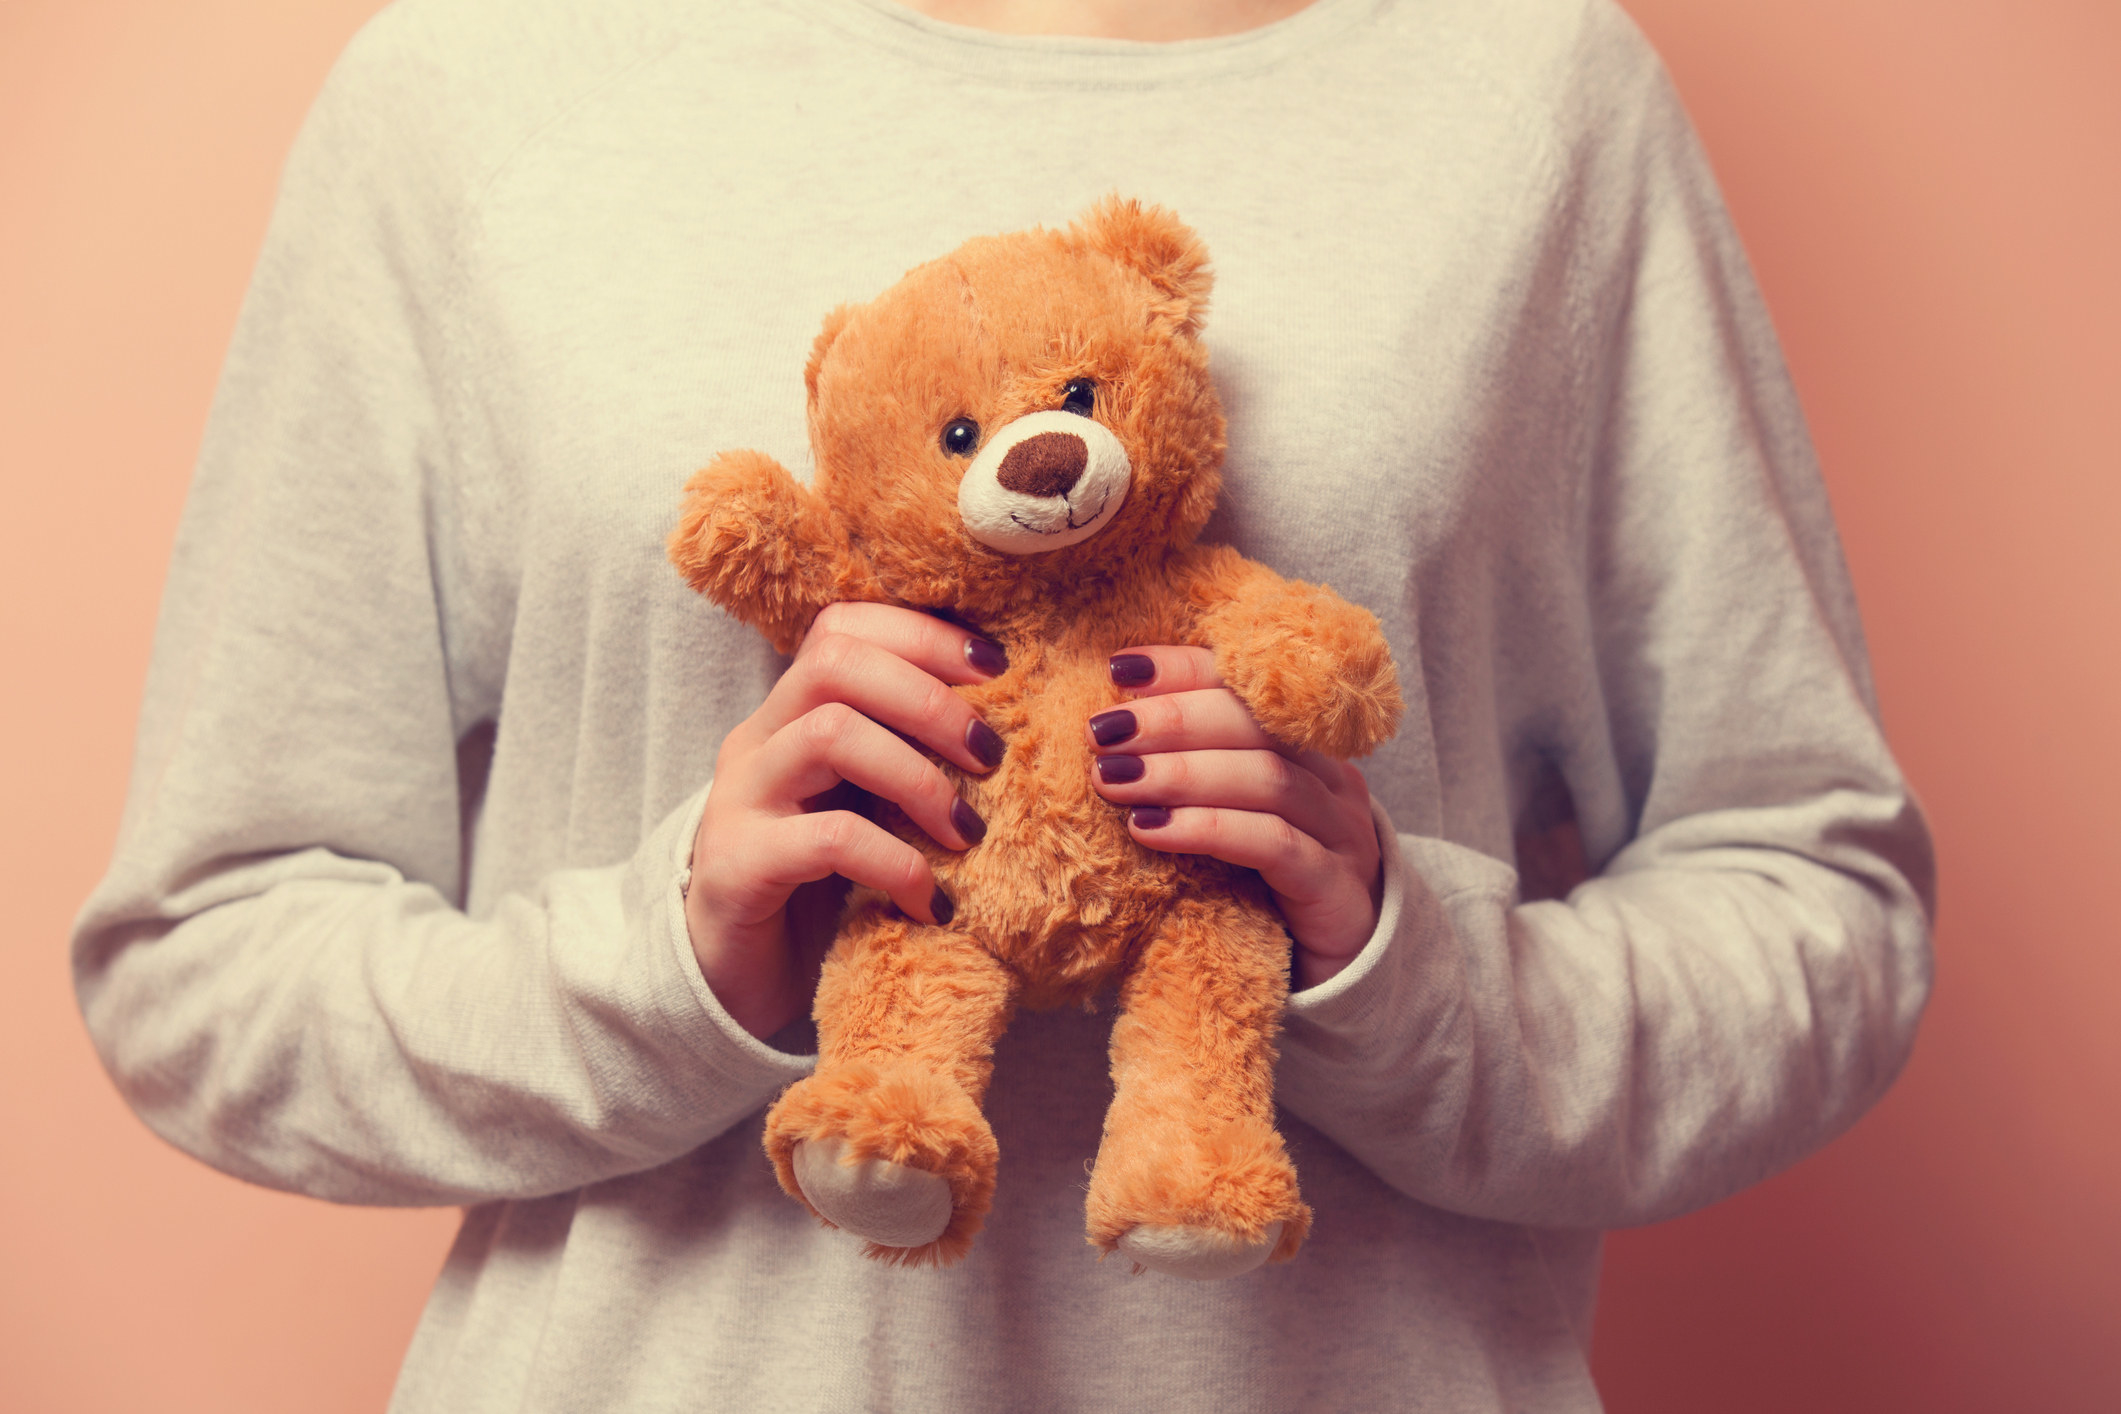 A person holds a teddy bear